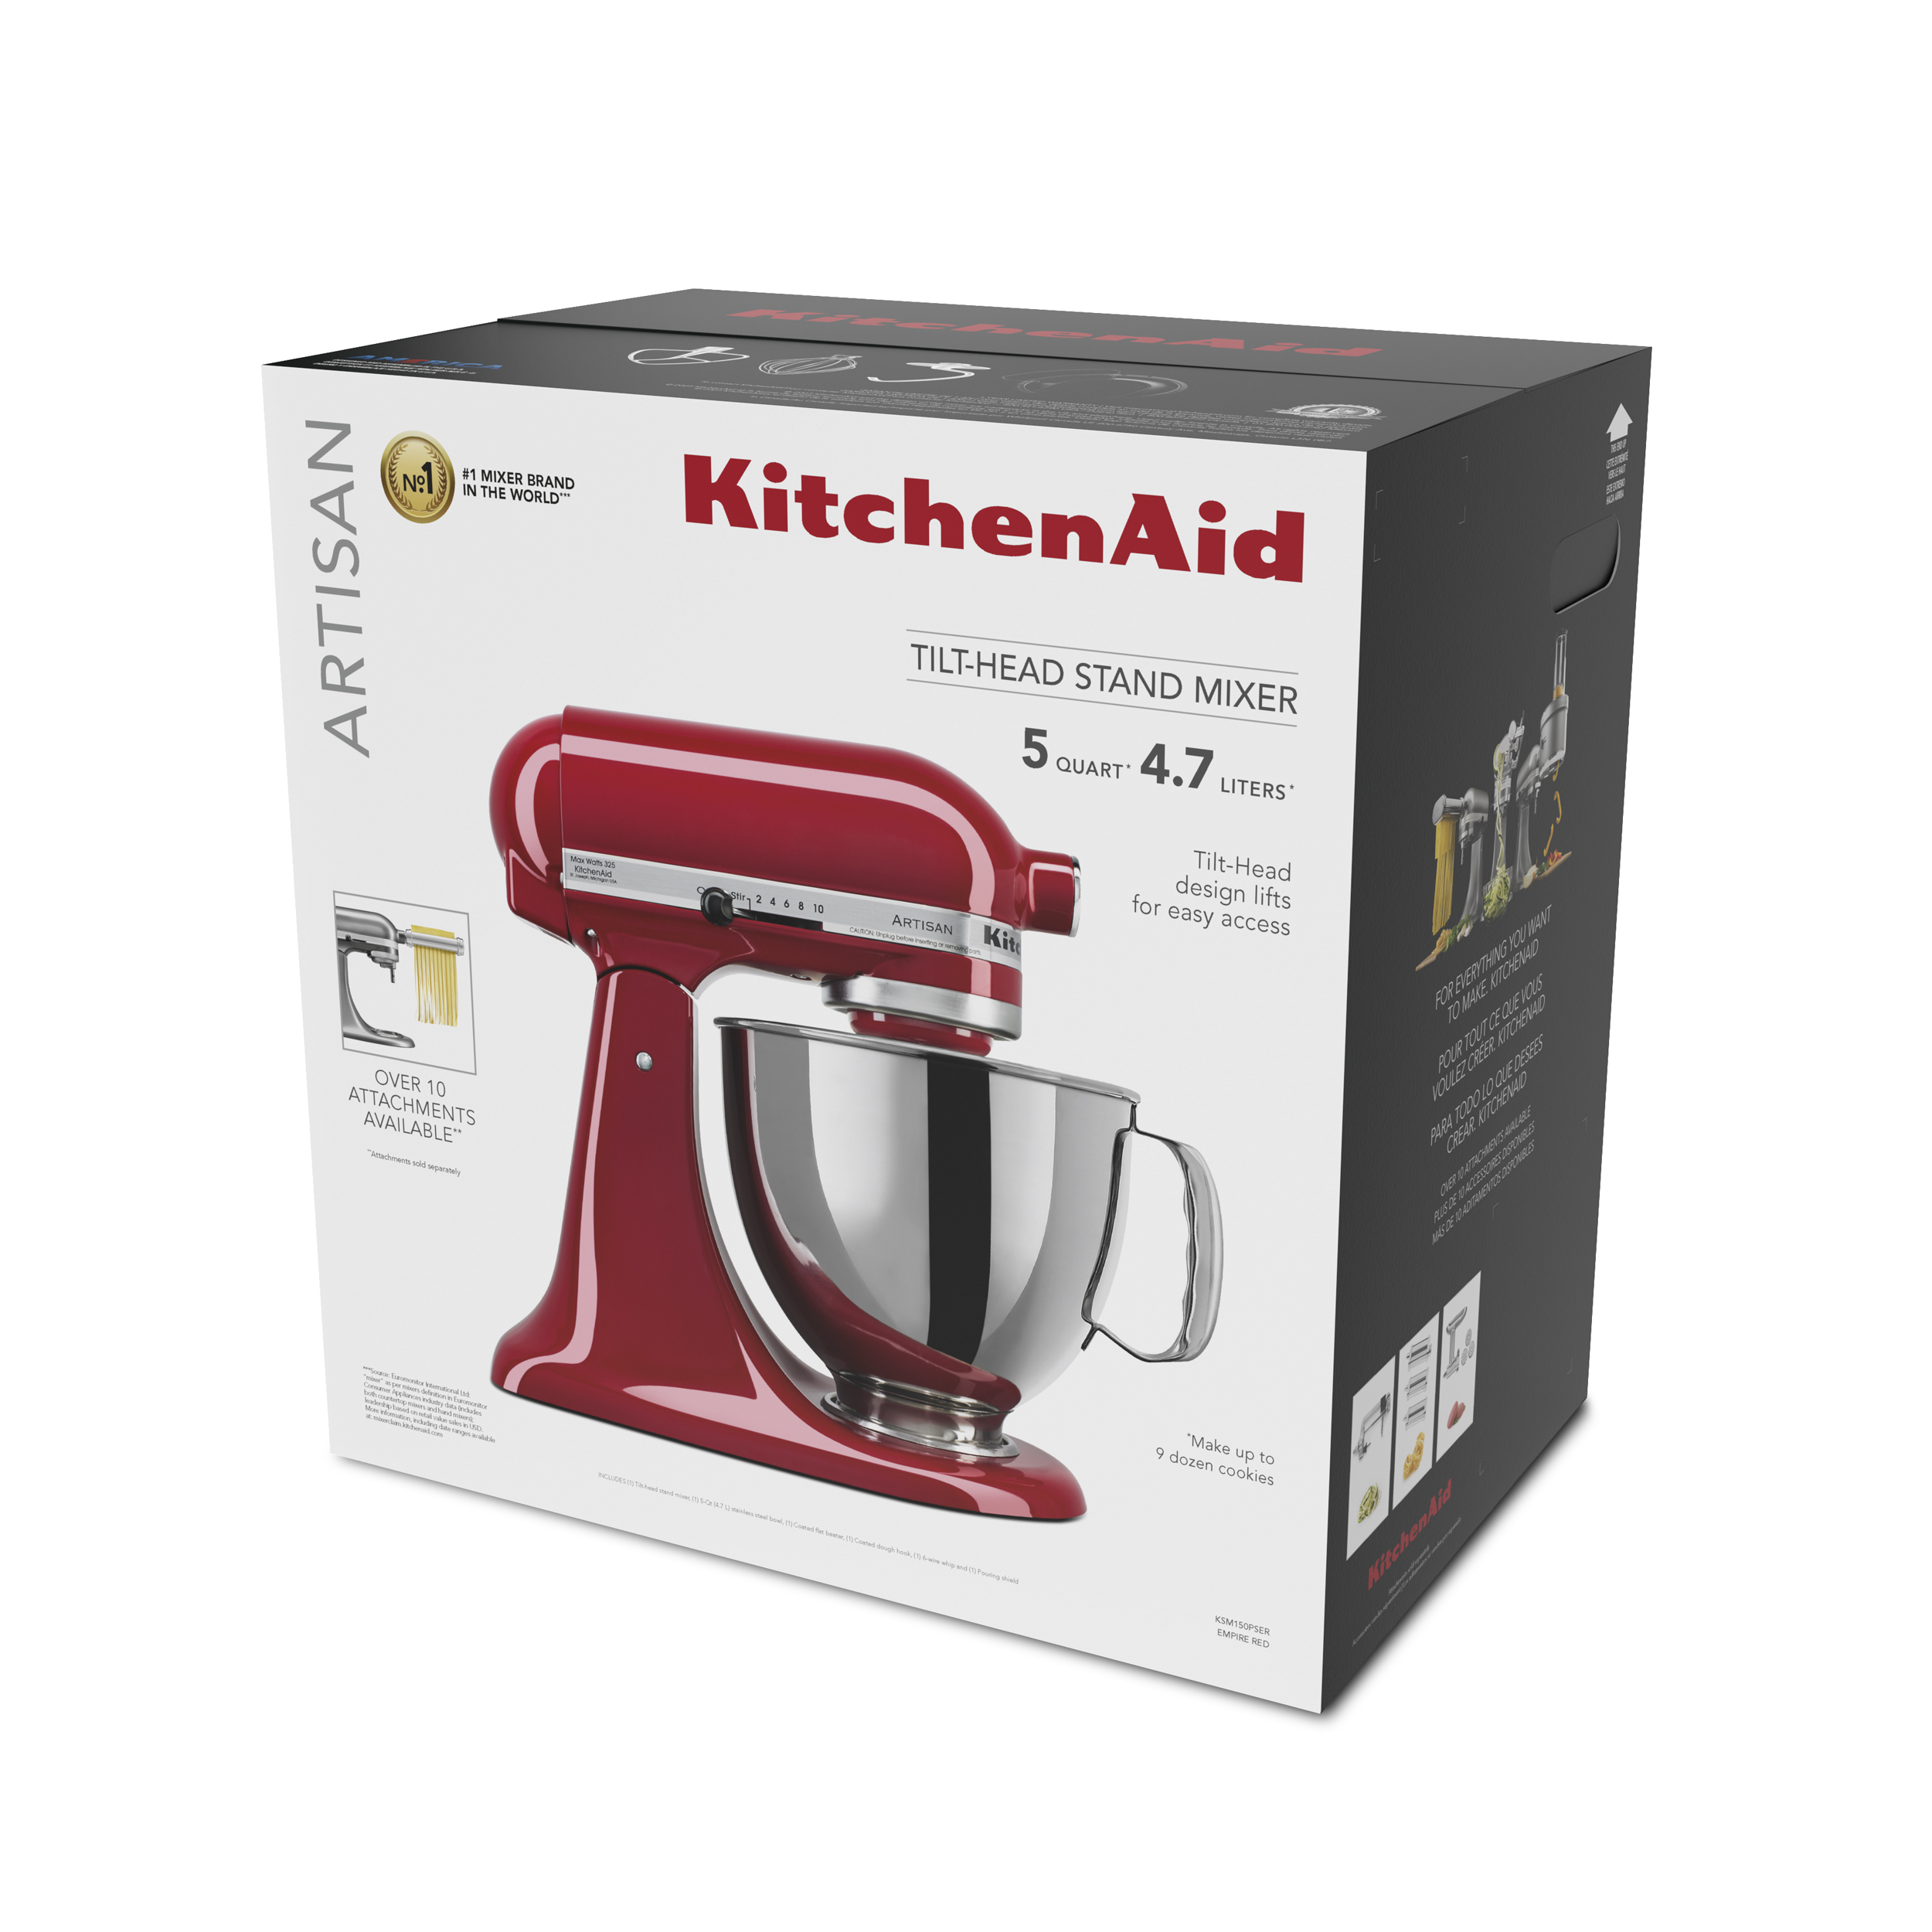 KitchenAid® Artisan® Series 5 Quart Tilt-Head Stand Mixer, Empire Red, KSM150PS - image 9 of 9